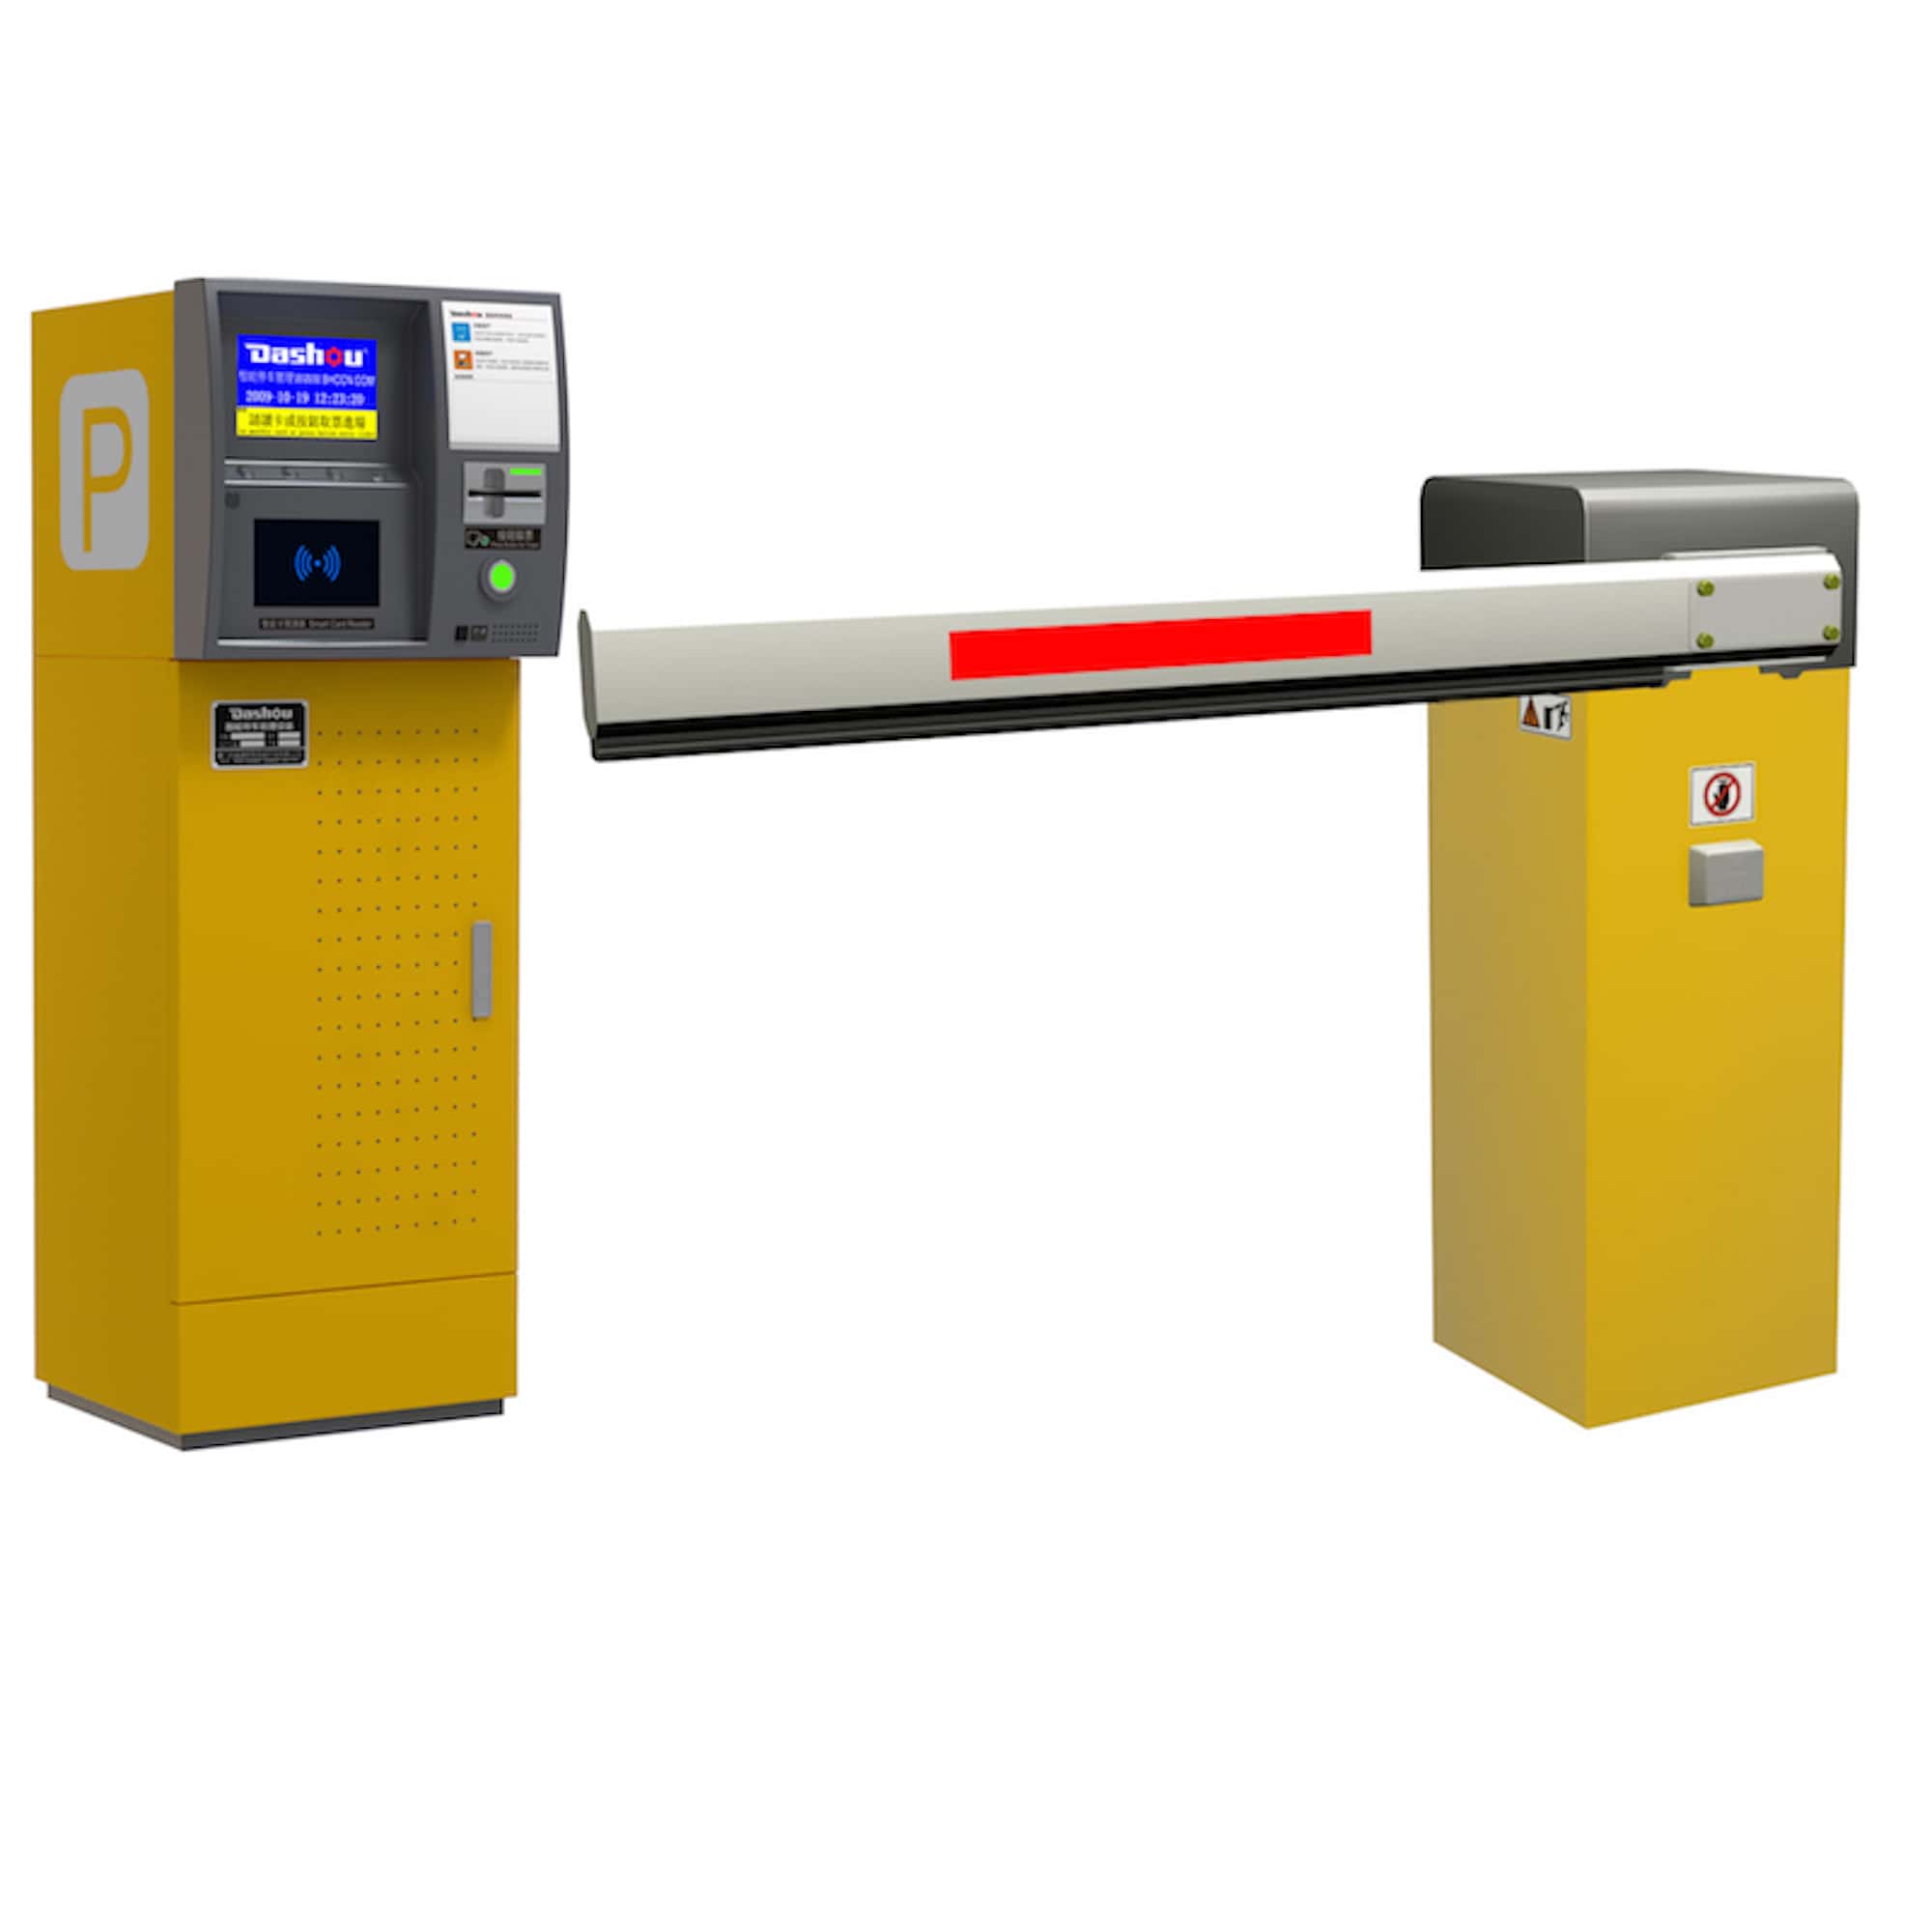  V32-910F Central Pay Ticket Dispensing Parking System